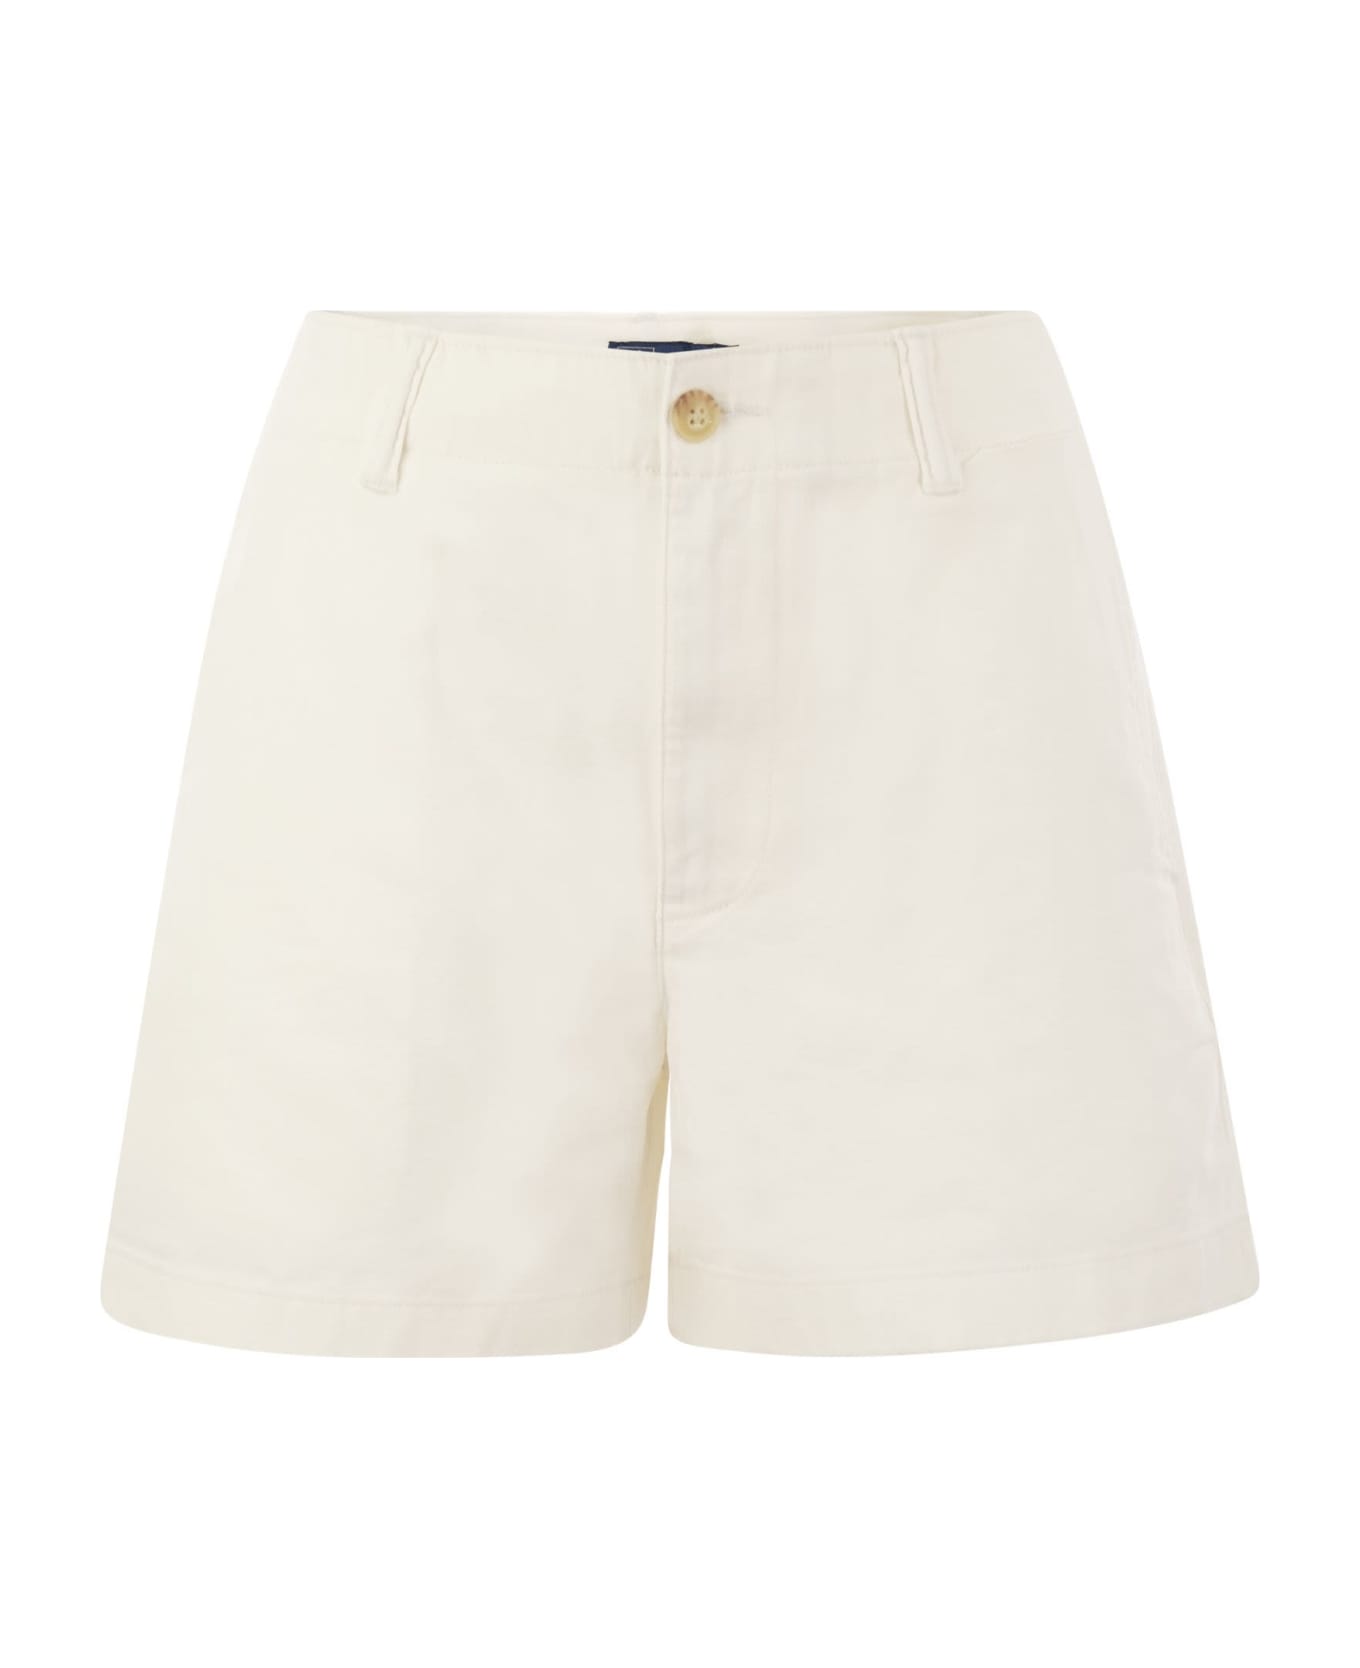 Polo Ralph Lauren Twill Chino Shorts - White